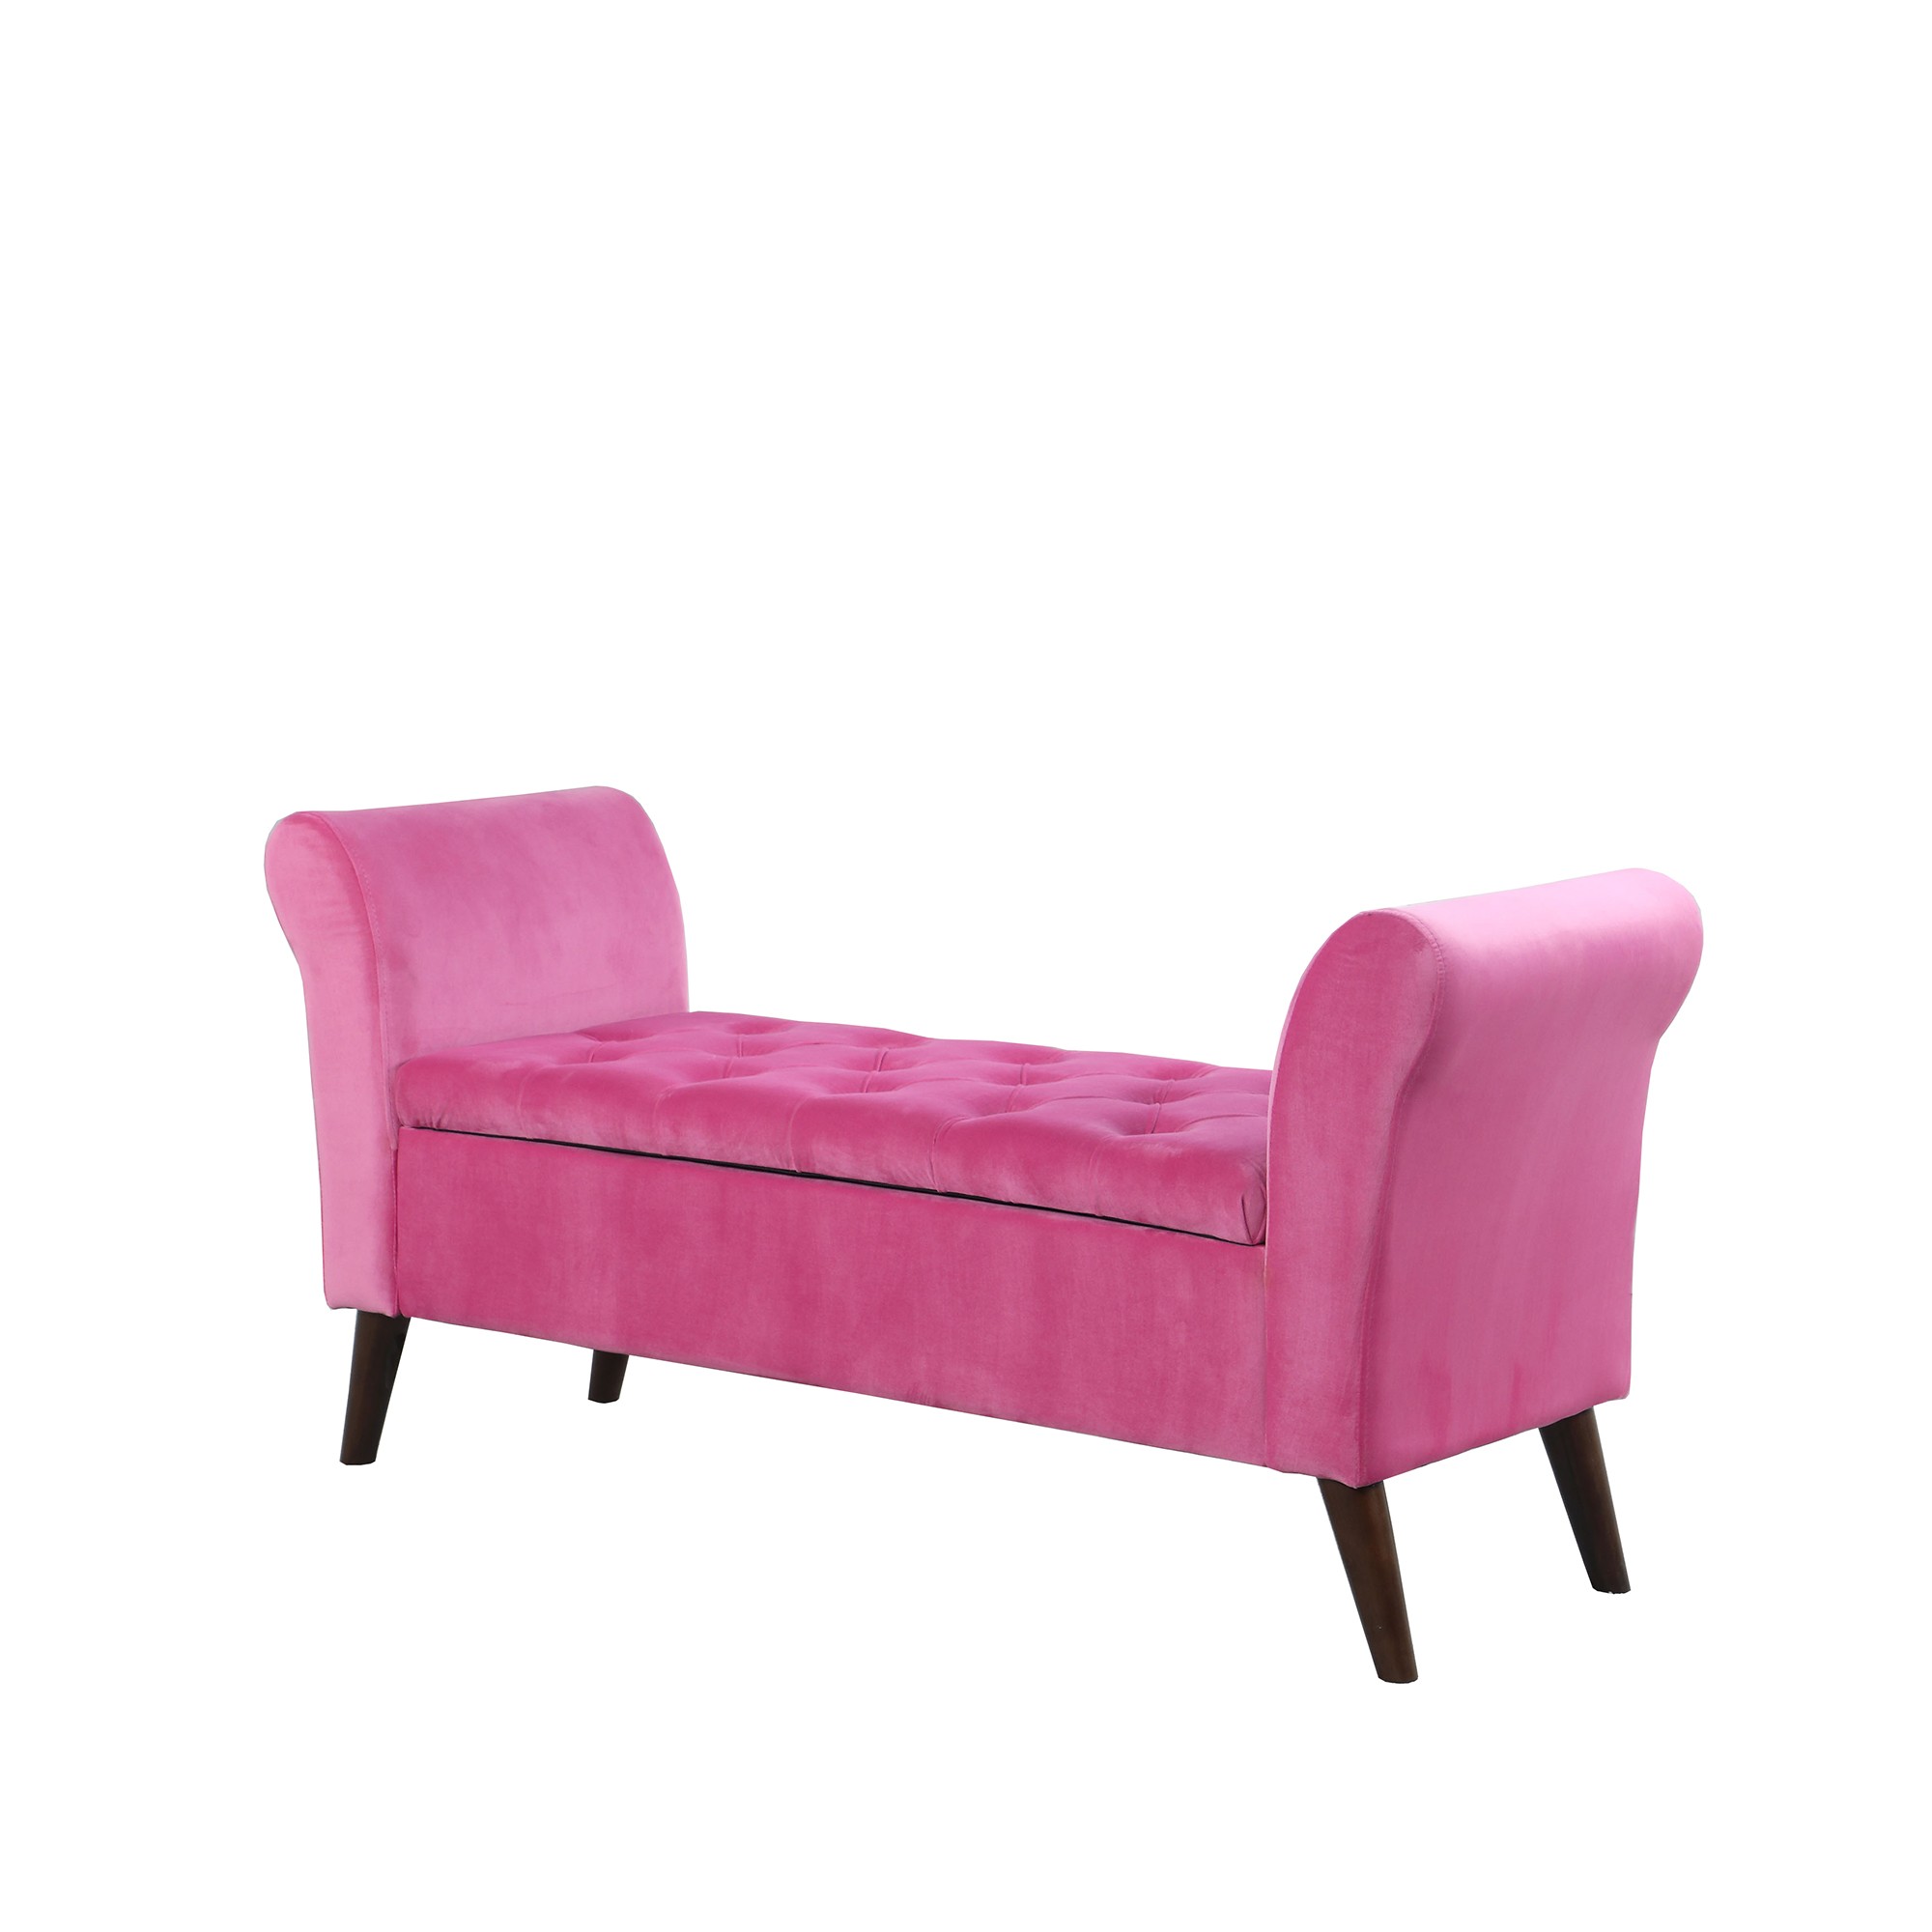 Hot Pink Tufted Velvet Settee Storage Bench